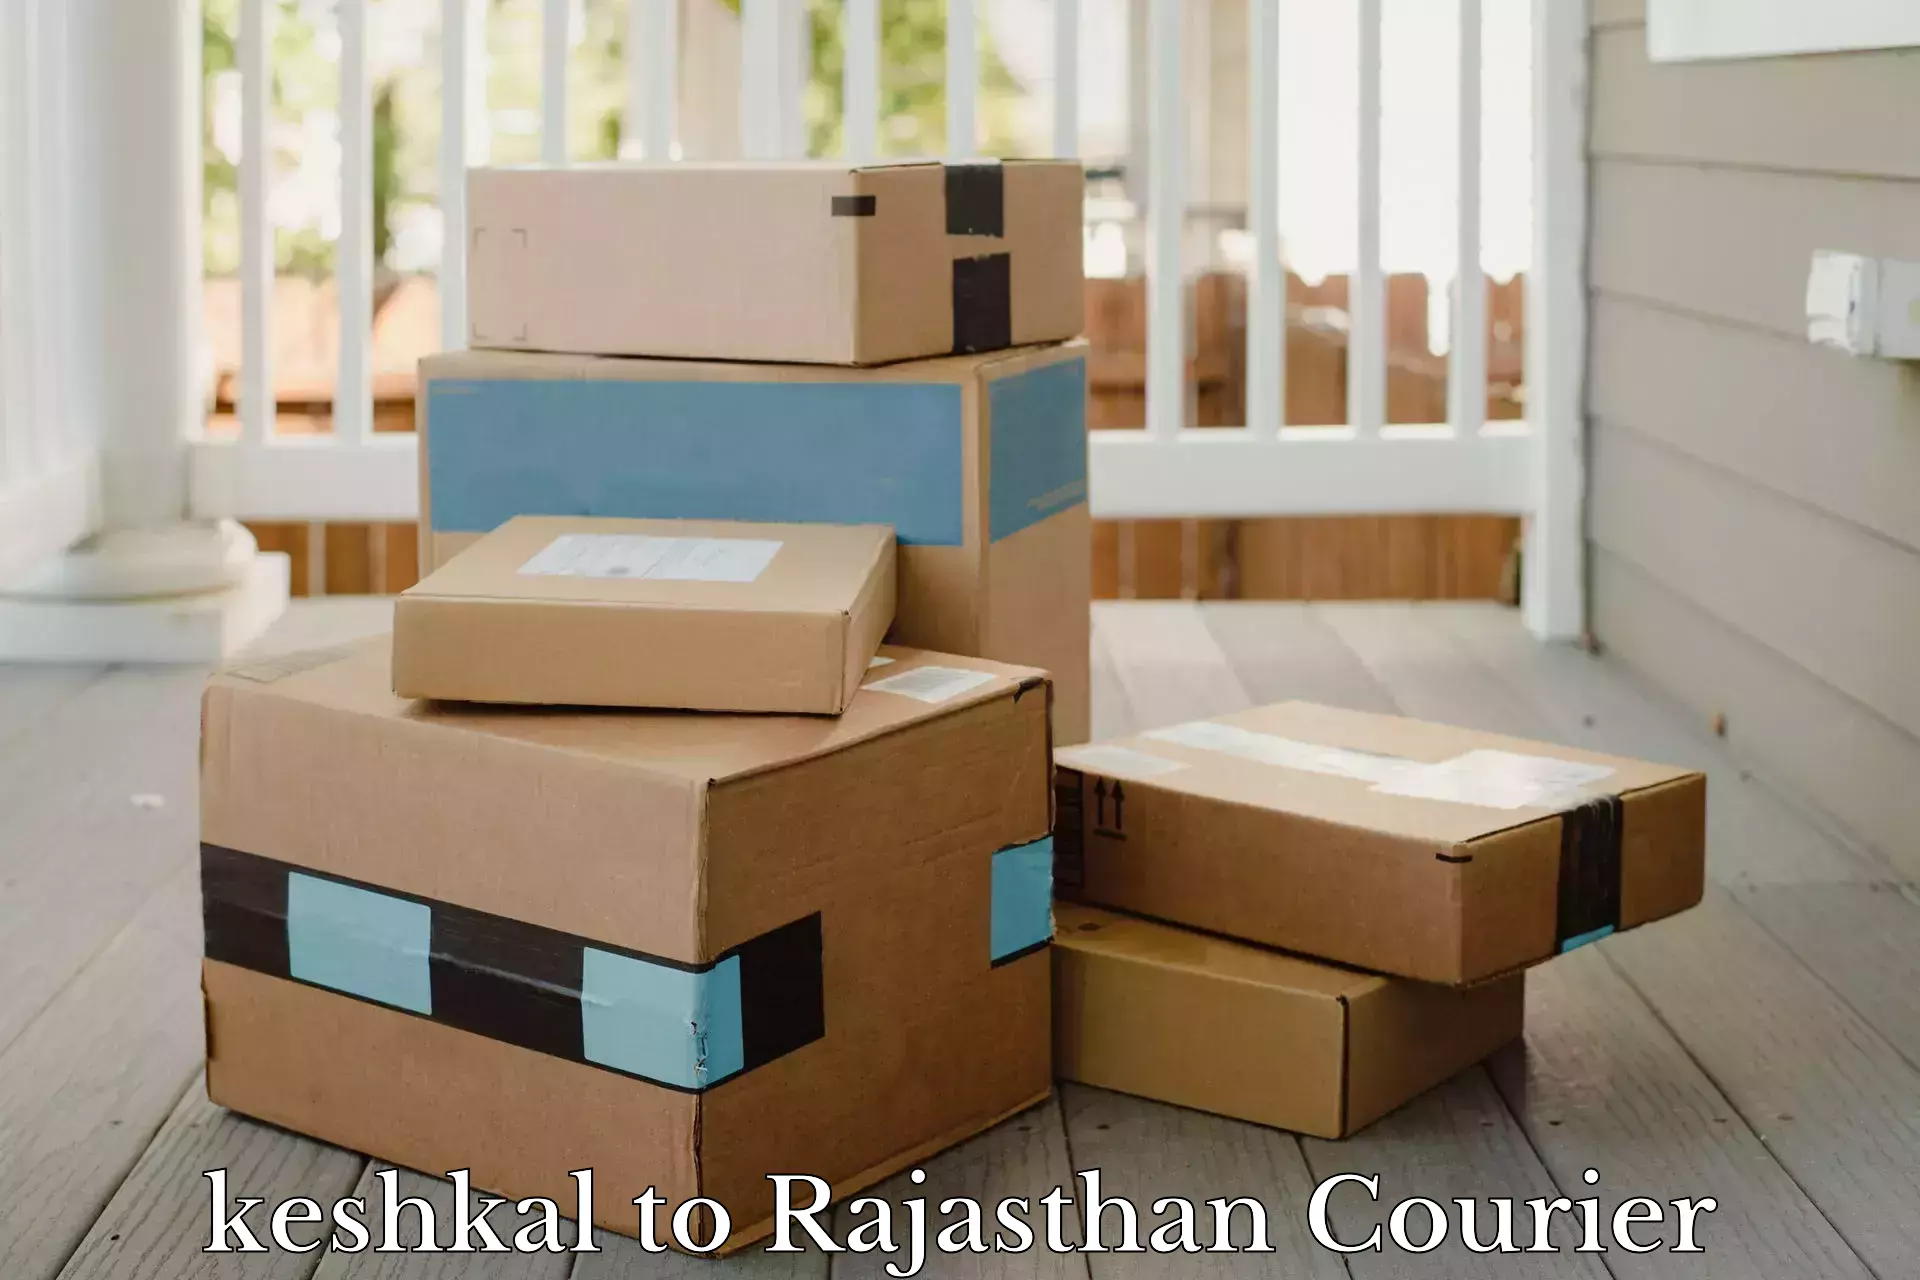 Full-service courier options keshkal to Bikaner